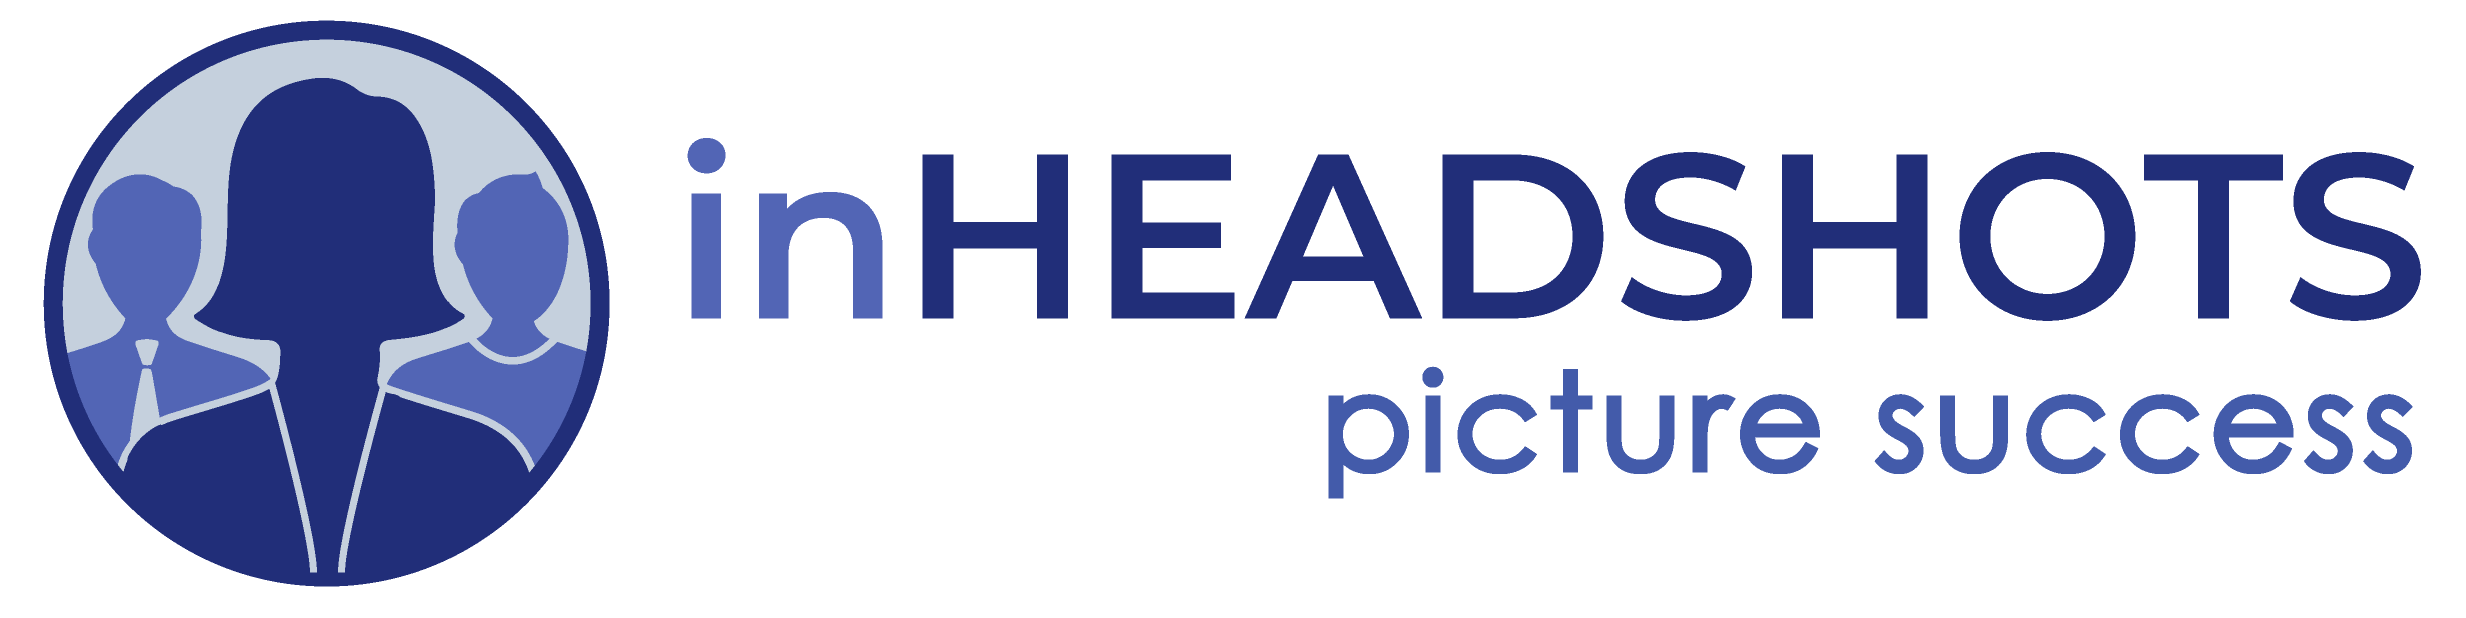 LinkedIn Headshot Studio